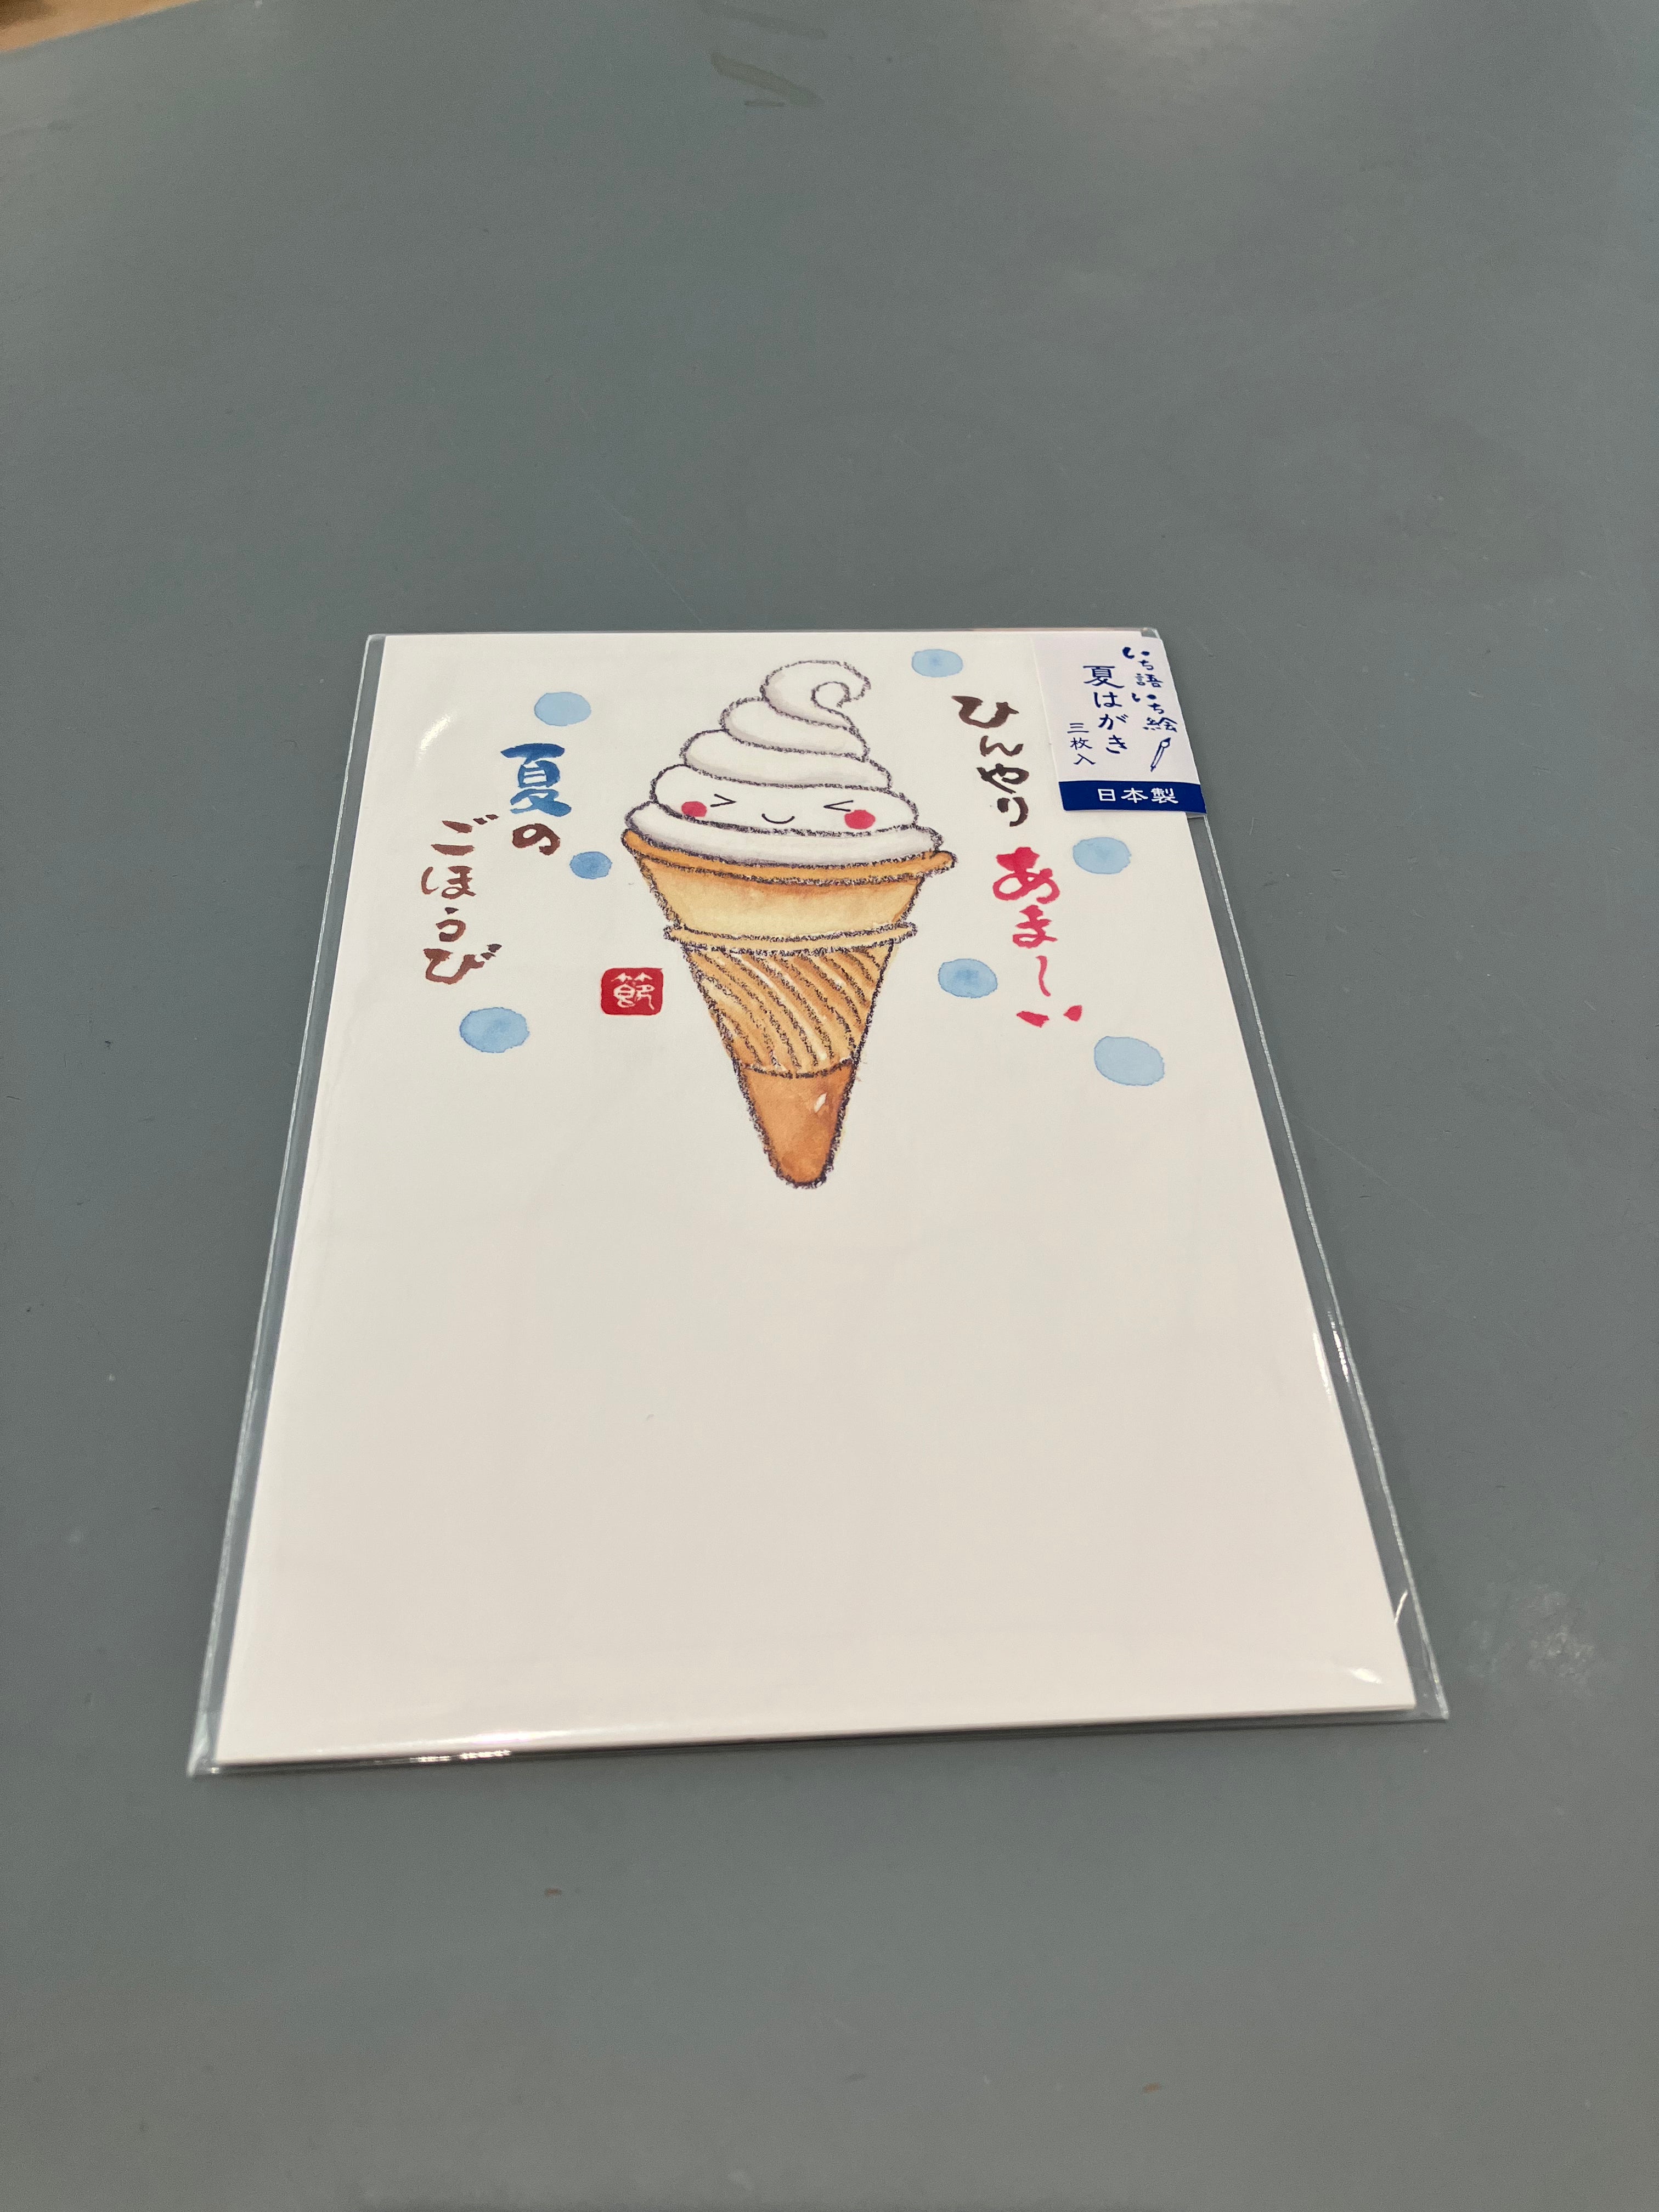 Pack of 3 cards - motif of ice cream cone